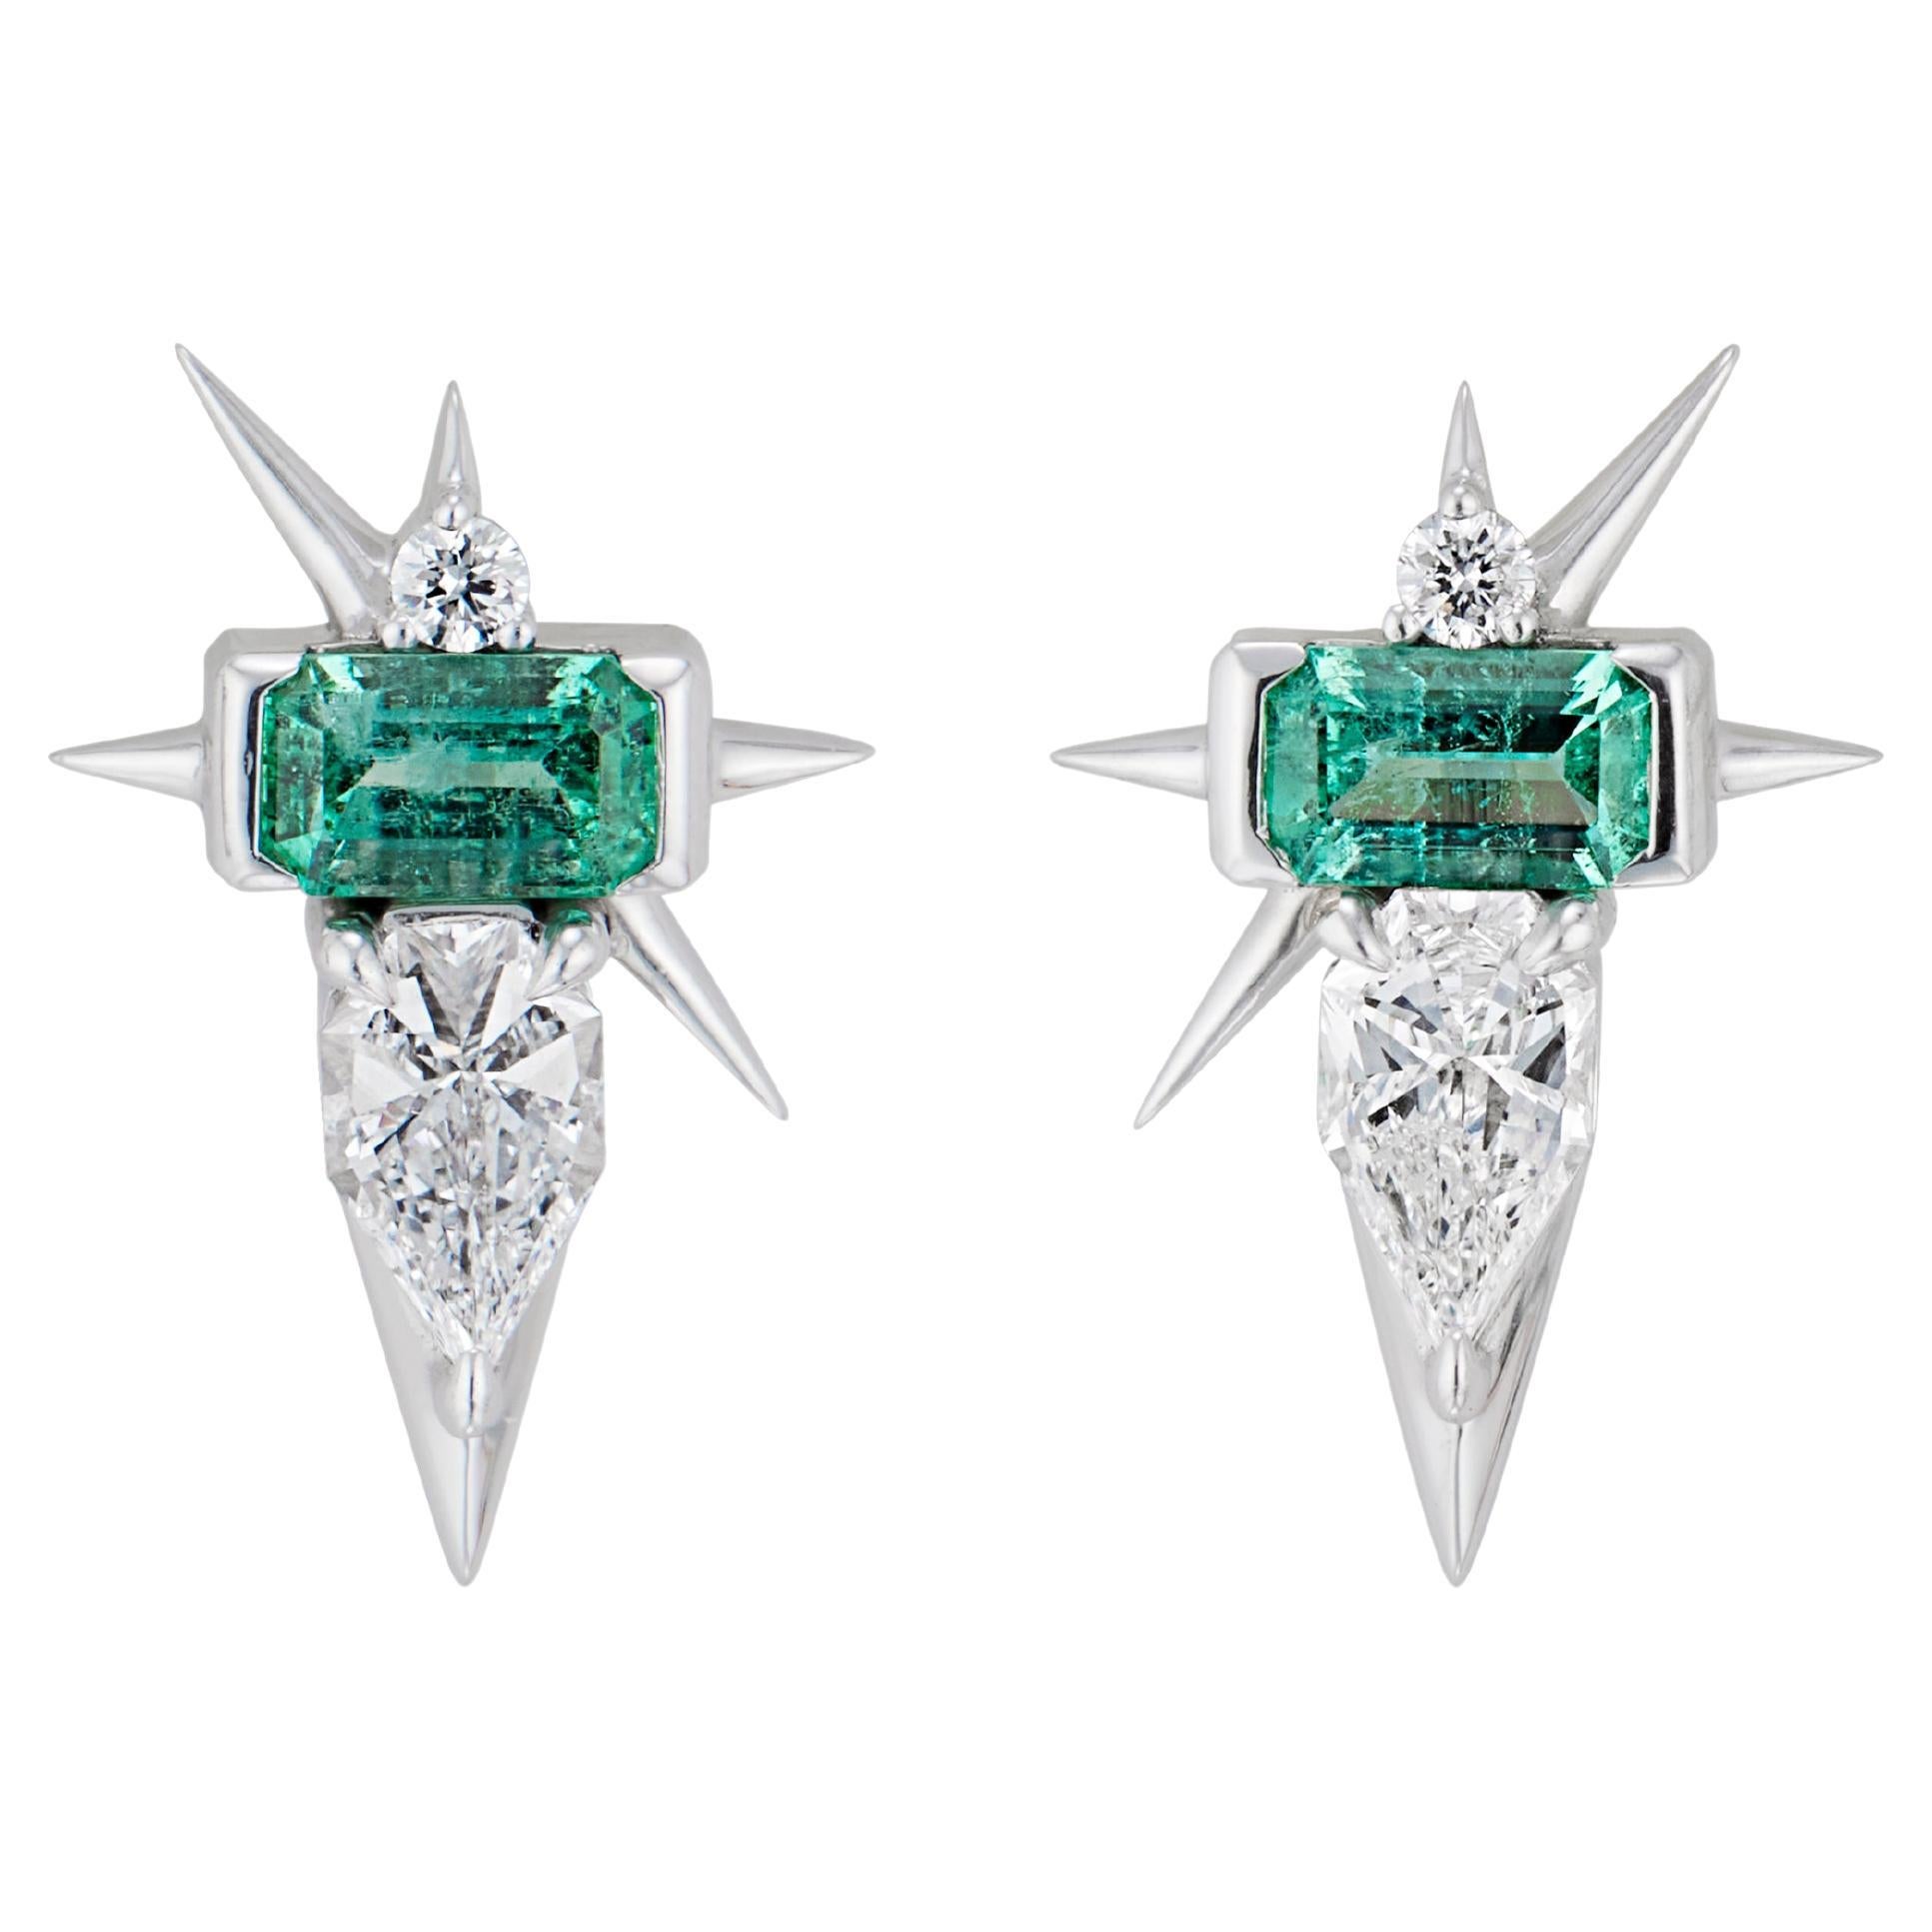 1.05ct Emerald & Diamond Spike Earrings in 14k White Gold